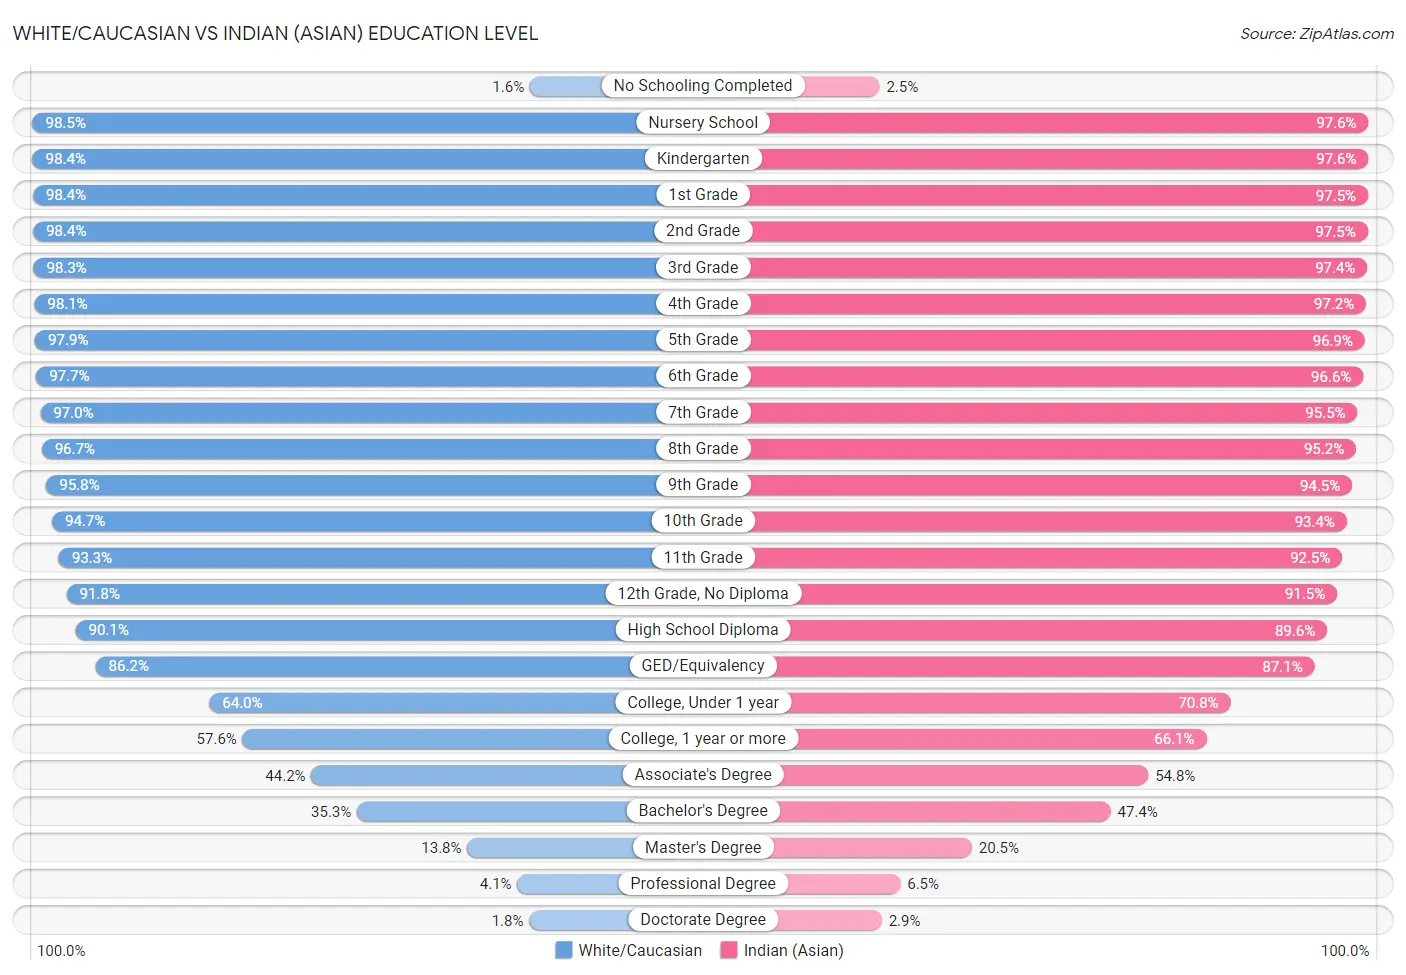 White/Caucasian vs Indian (Asian) Education Level